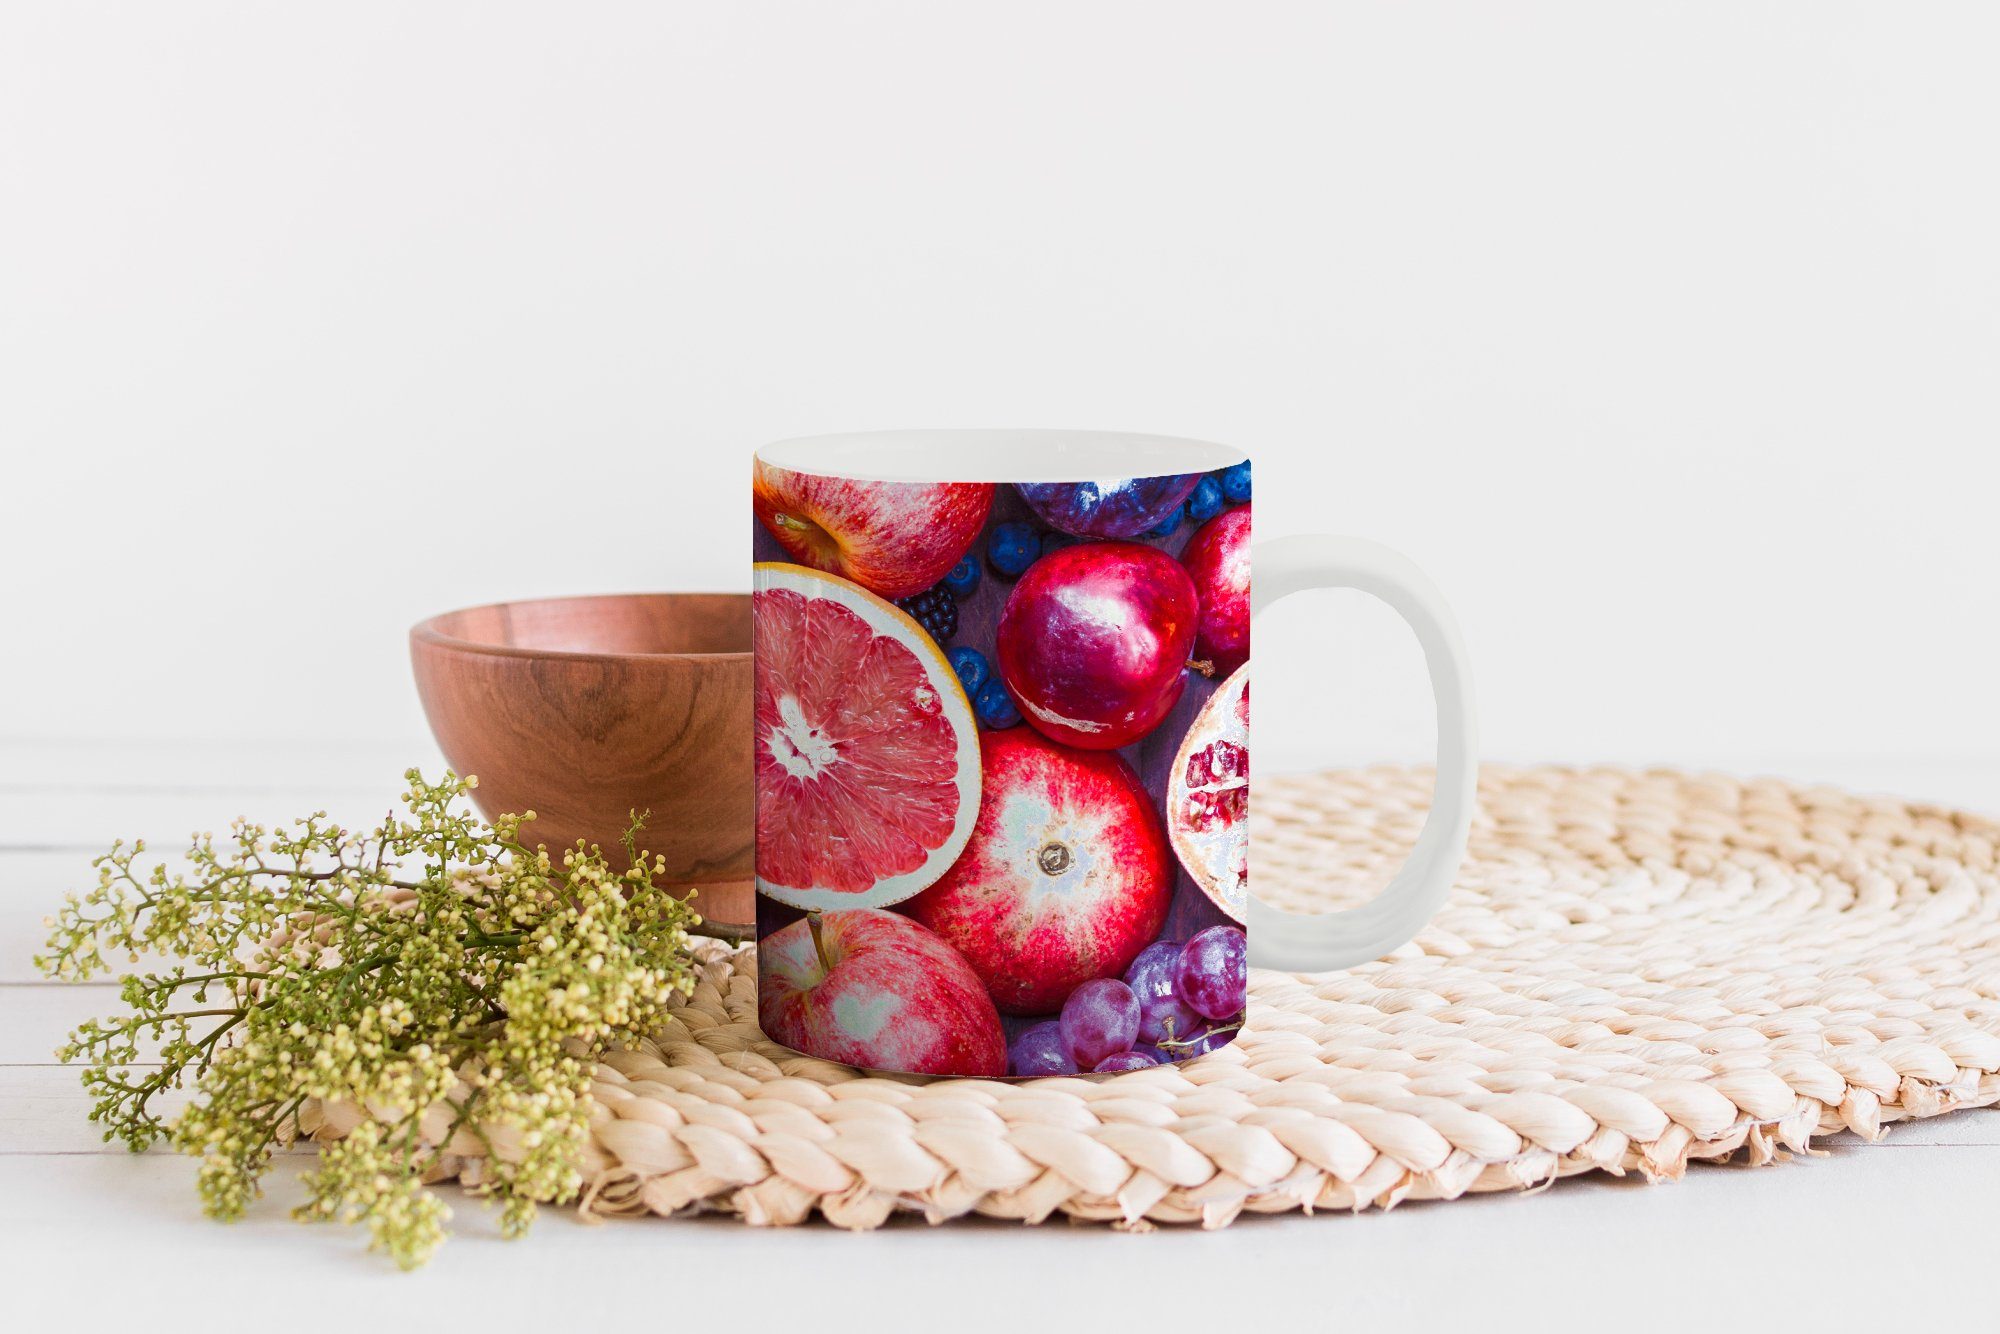 MuchoWow Tasse Obst - Geschenk Keramik, Farben, Teetasse, Teetasse, Regenbogen Becher, - Kaffeetassen